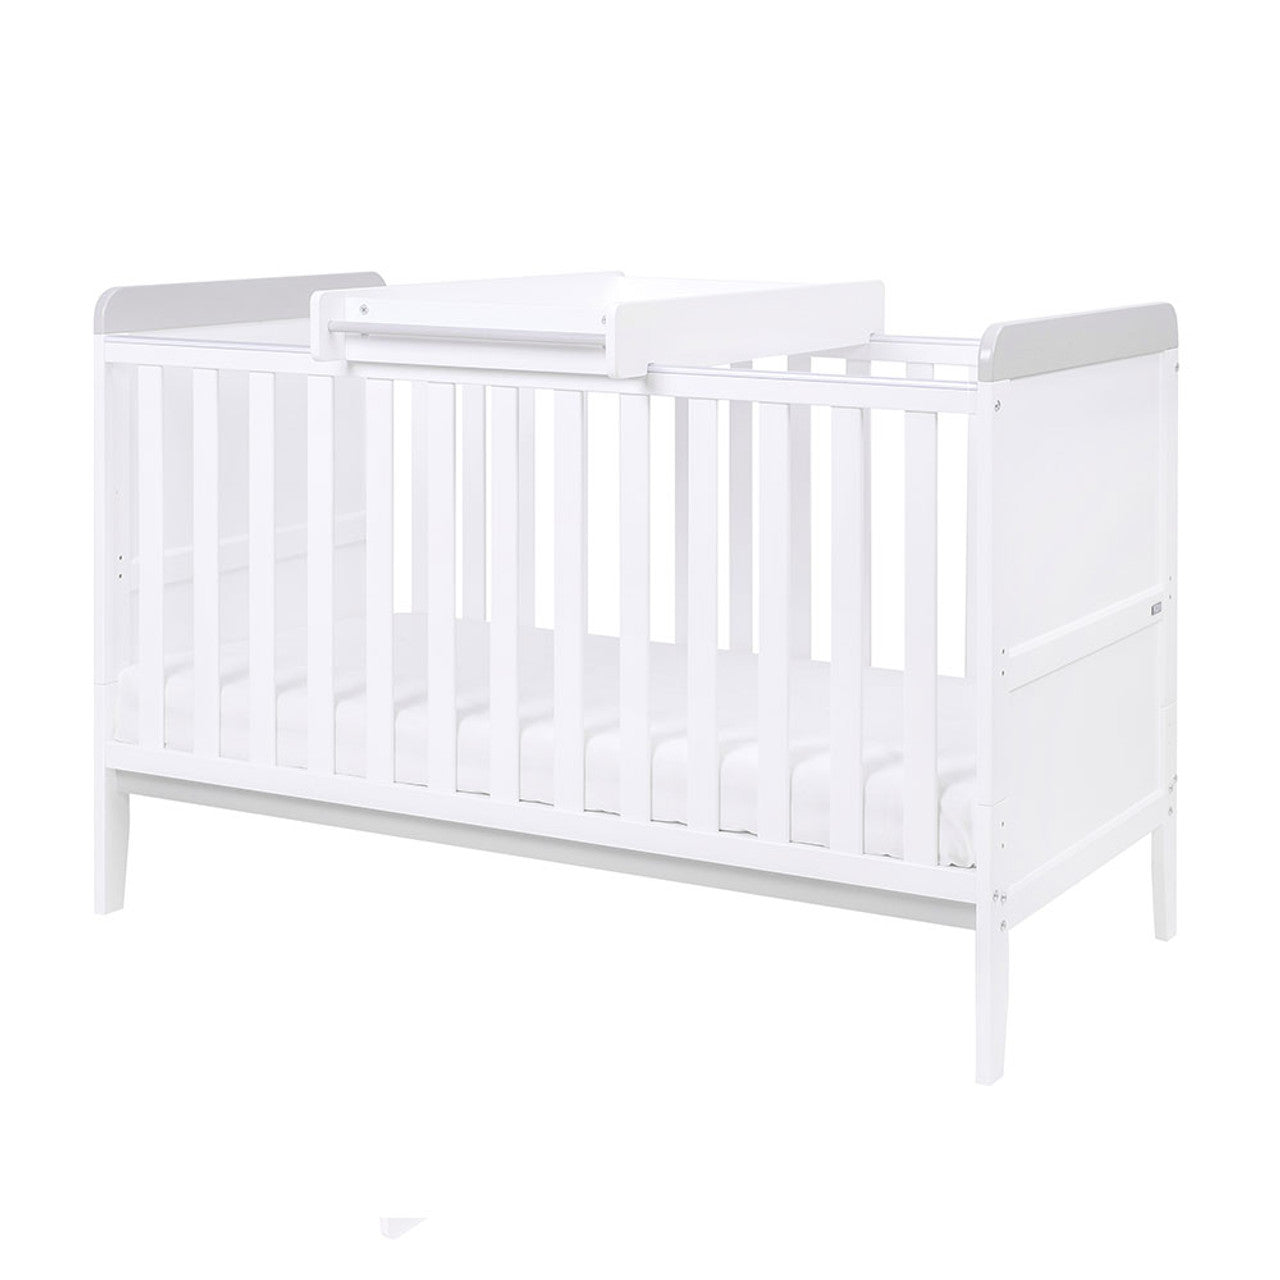 Tutti Bambini Rio 2 Piece Room Set - White/Dove Grey - For Your Little One